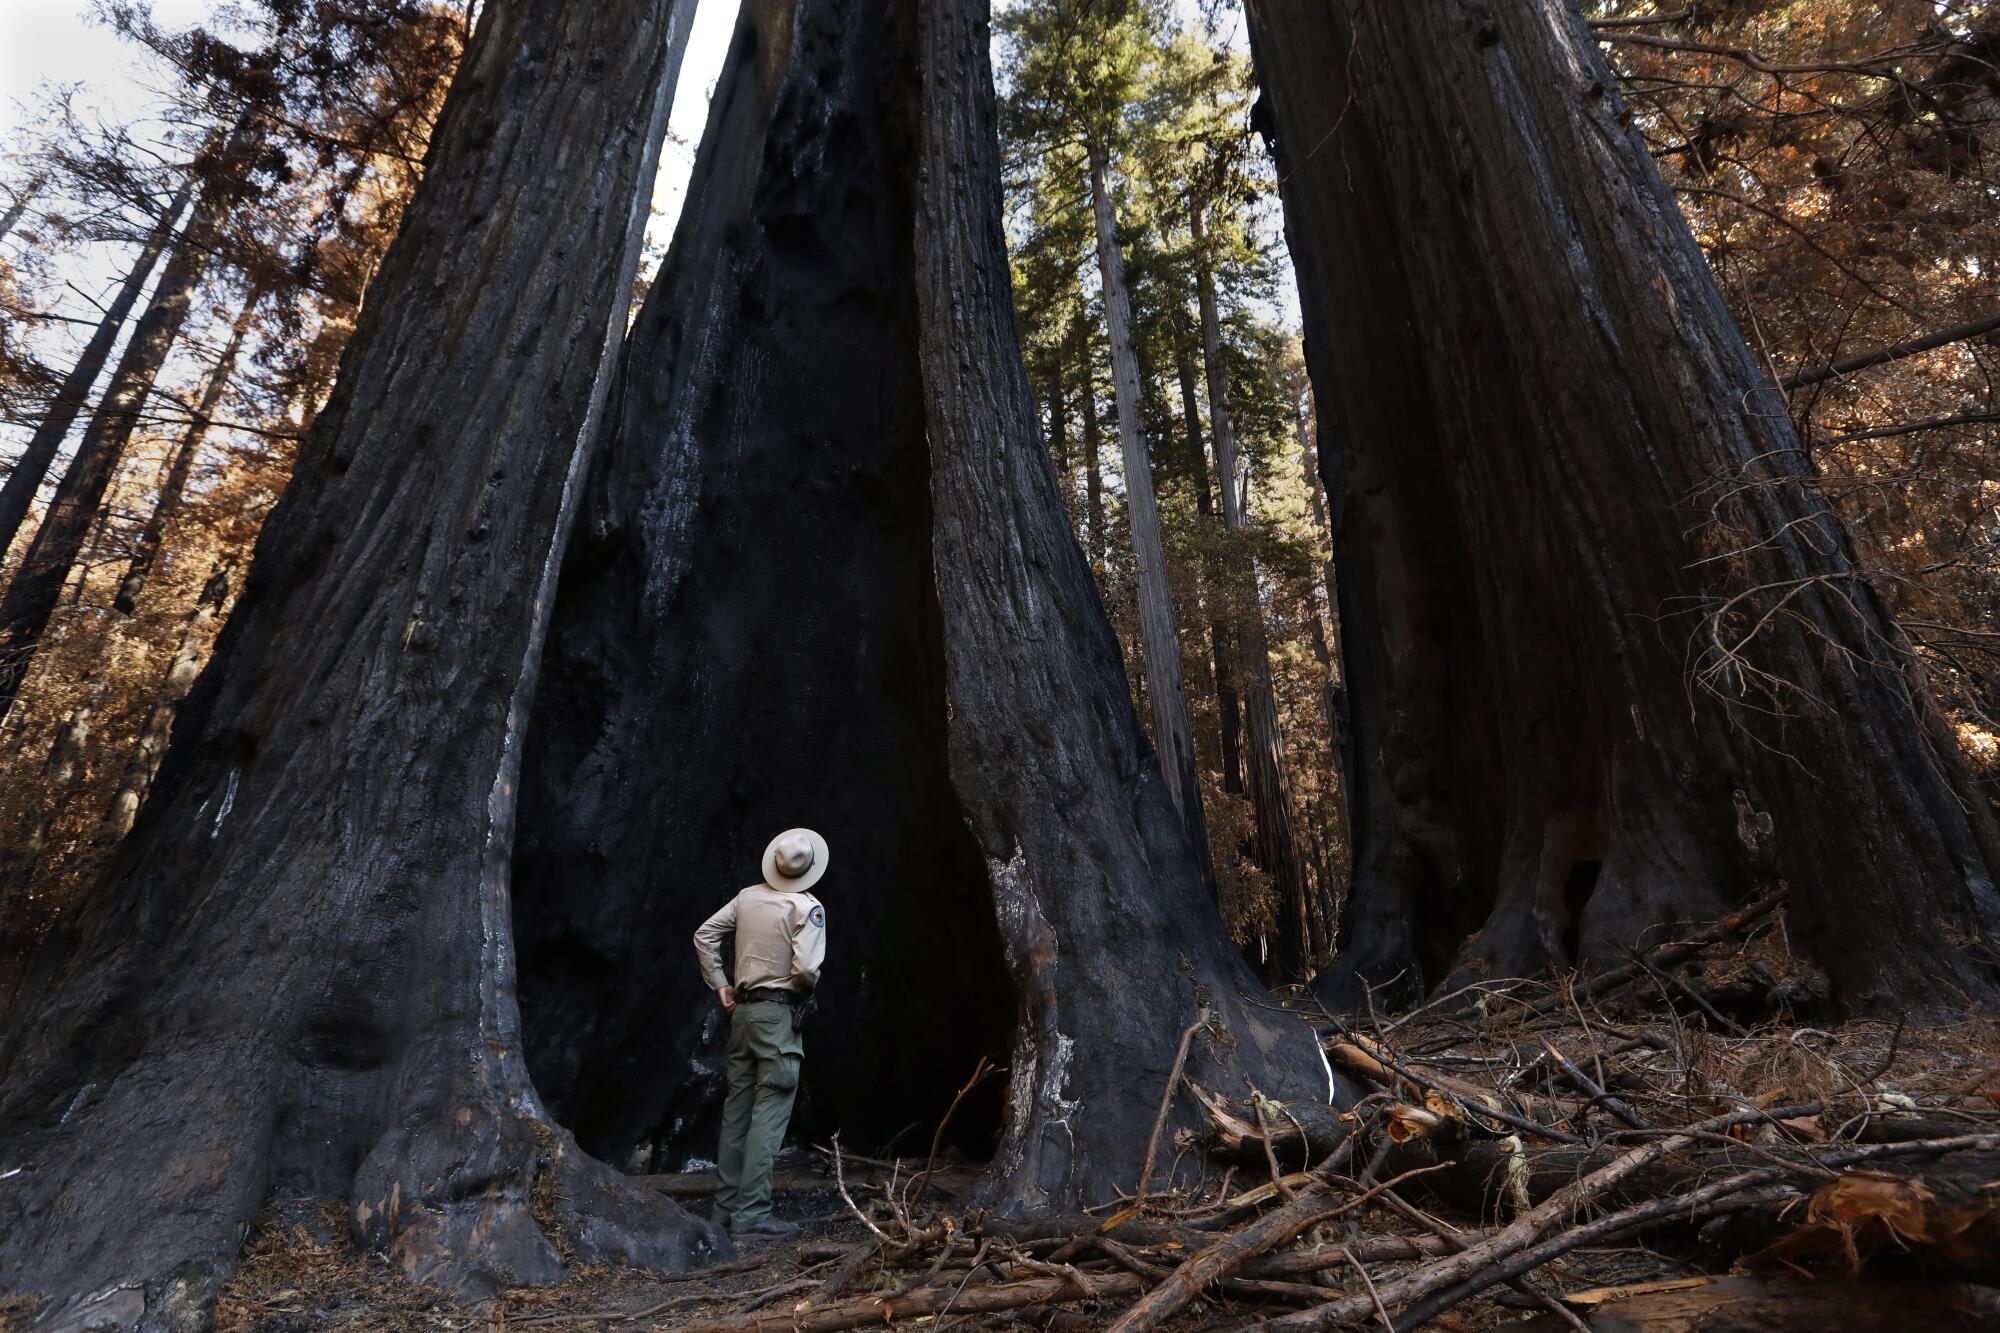 State park ranger and safety officer Gabe McKenna inspects a burned redwood in Big Basin Redwoods State Park.